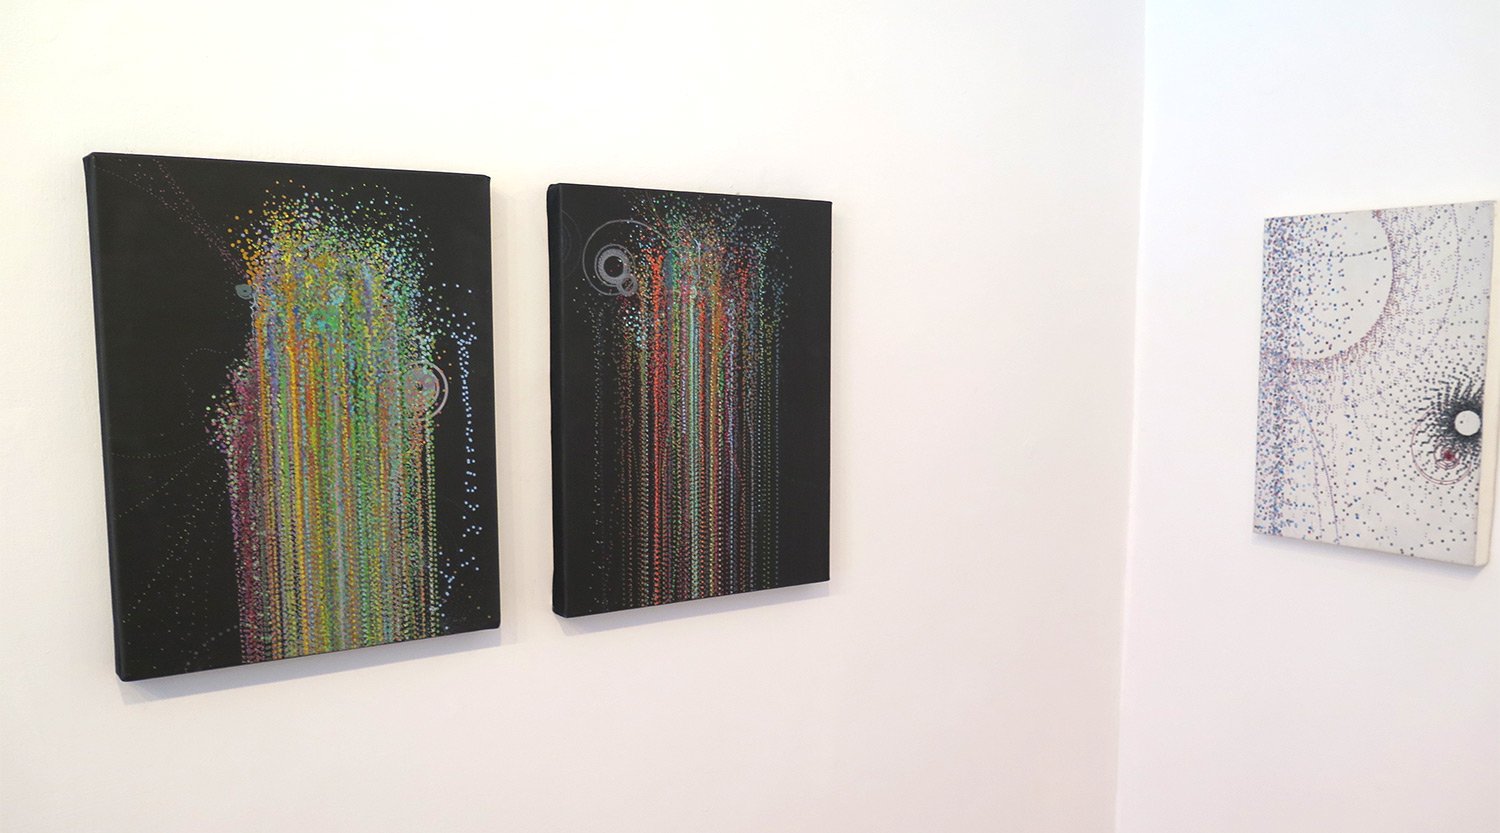 Exhibition-Goldstein Gallery, Chatham, NY 2014